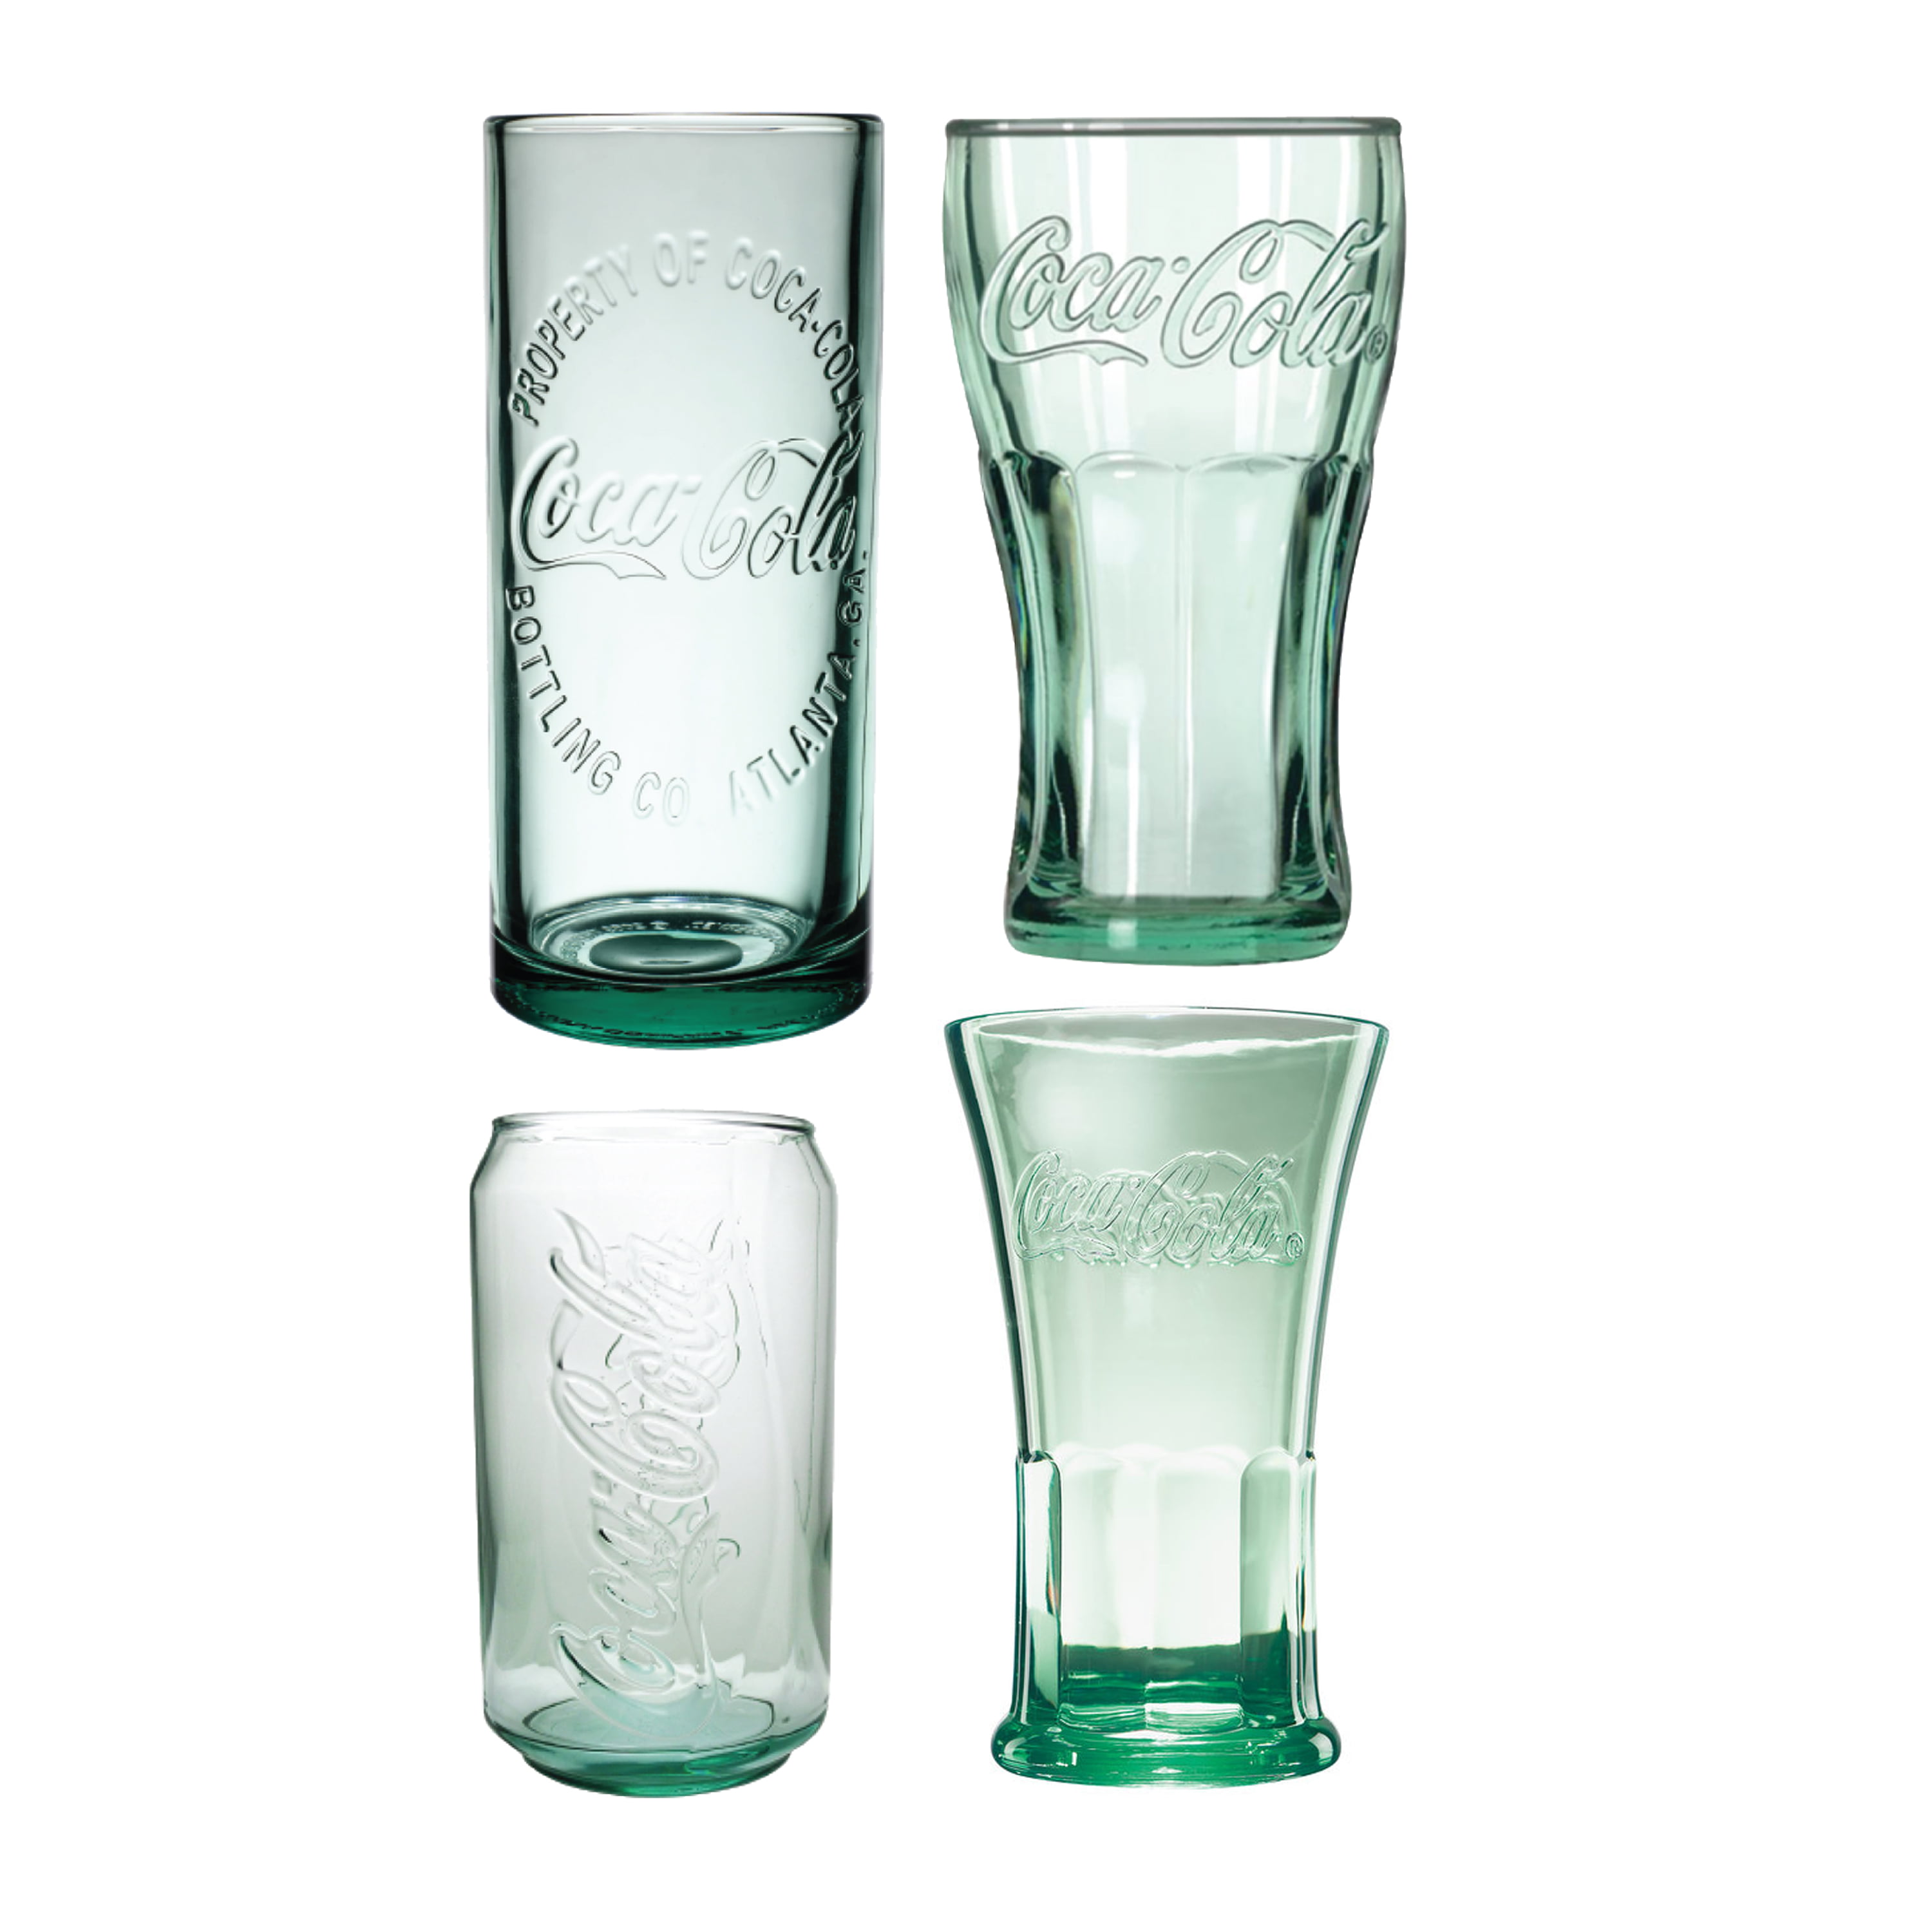 Coca Cola Glass Collectors Set with Vintage Glasses, Coasters, and  Pretzels, 3 oz